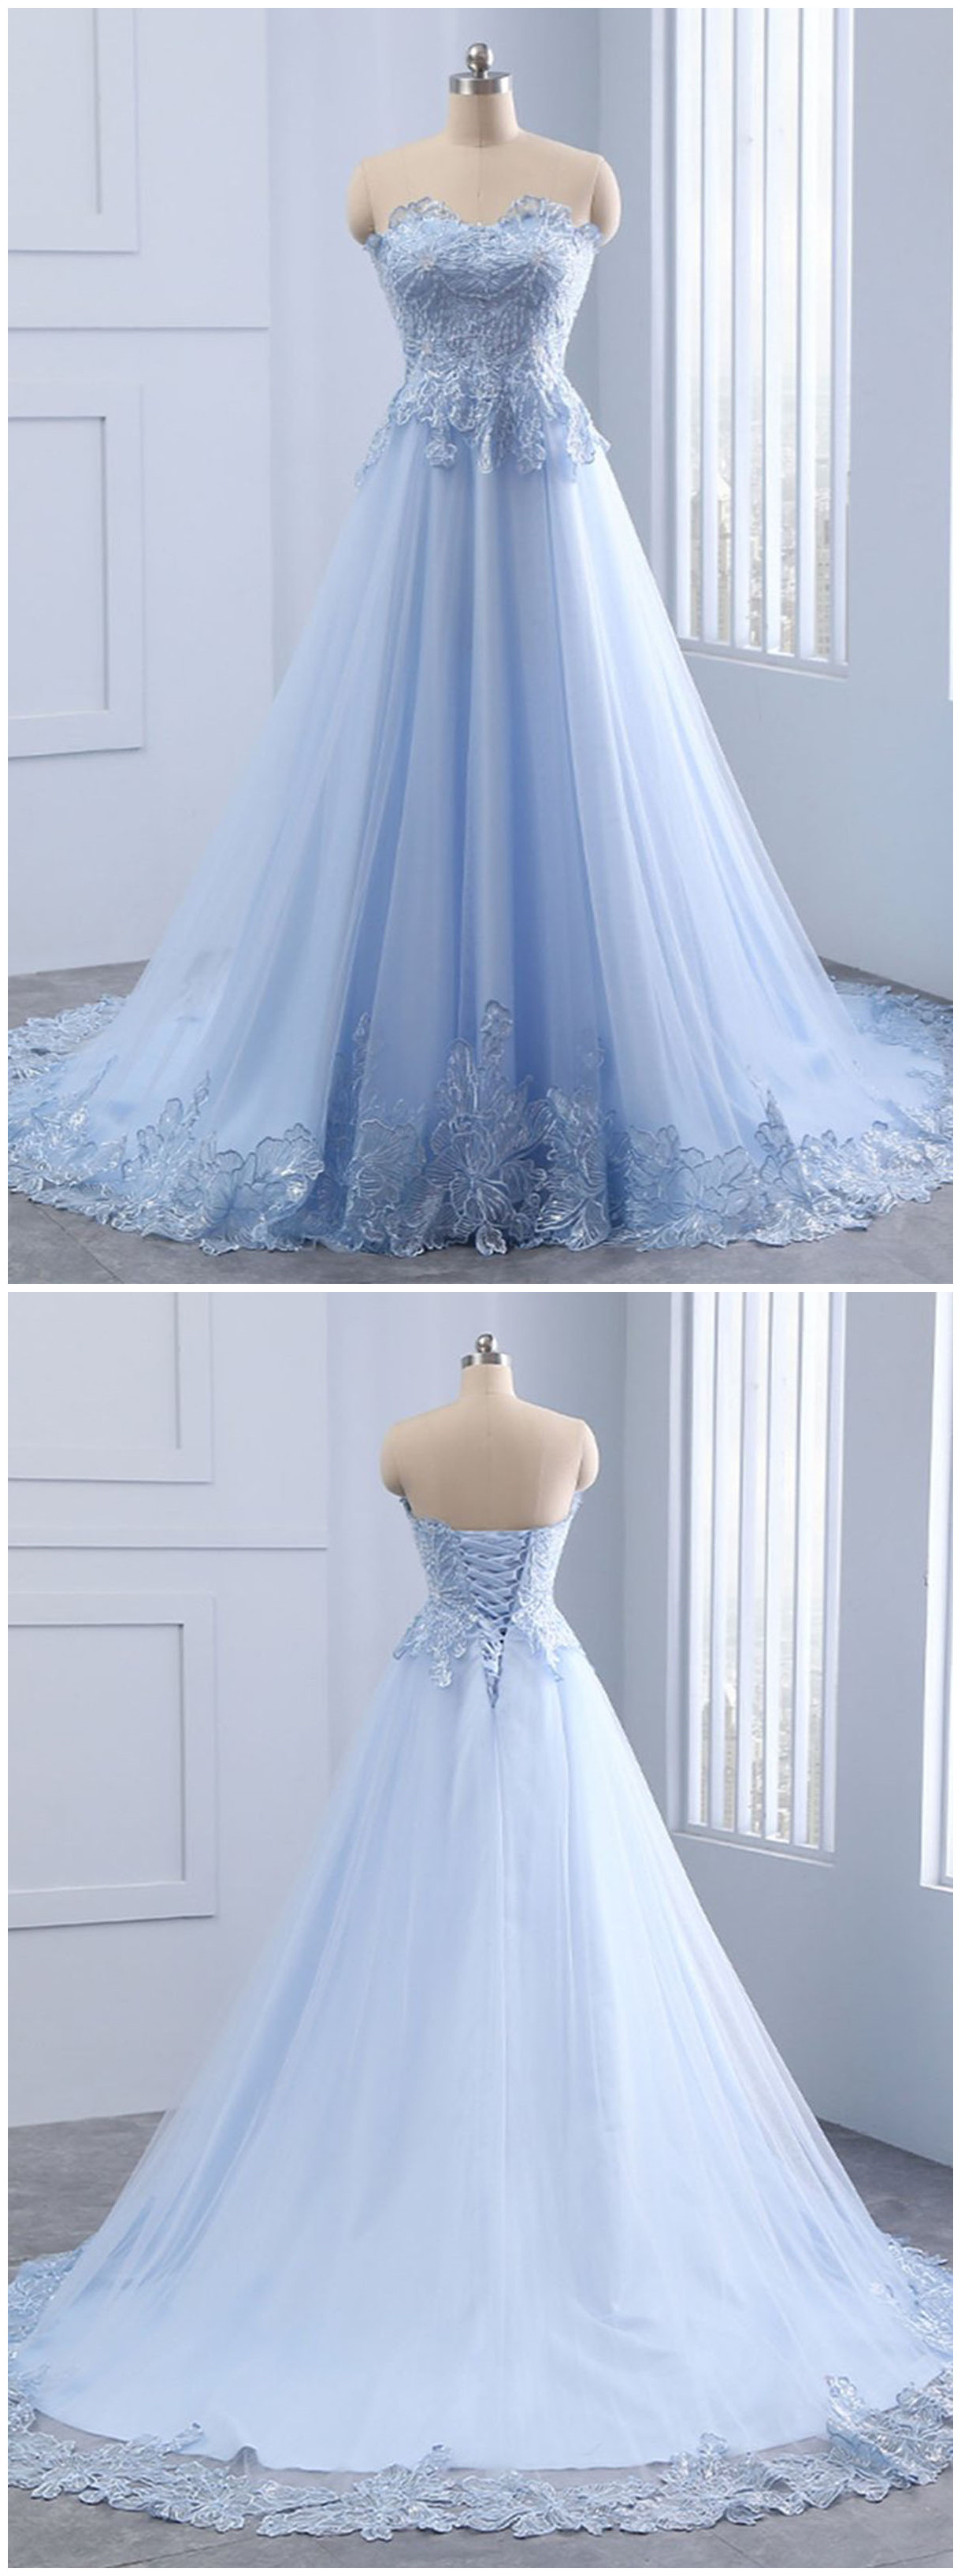 Sweetheart Neck Blue Lace A-line Long Graduation Dress, Blue Tulle Senior Prom Dress